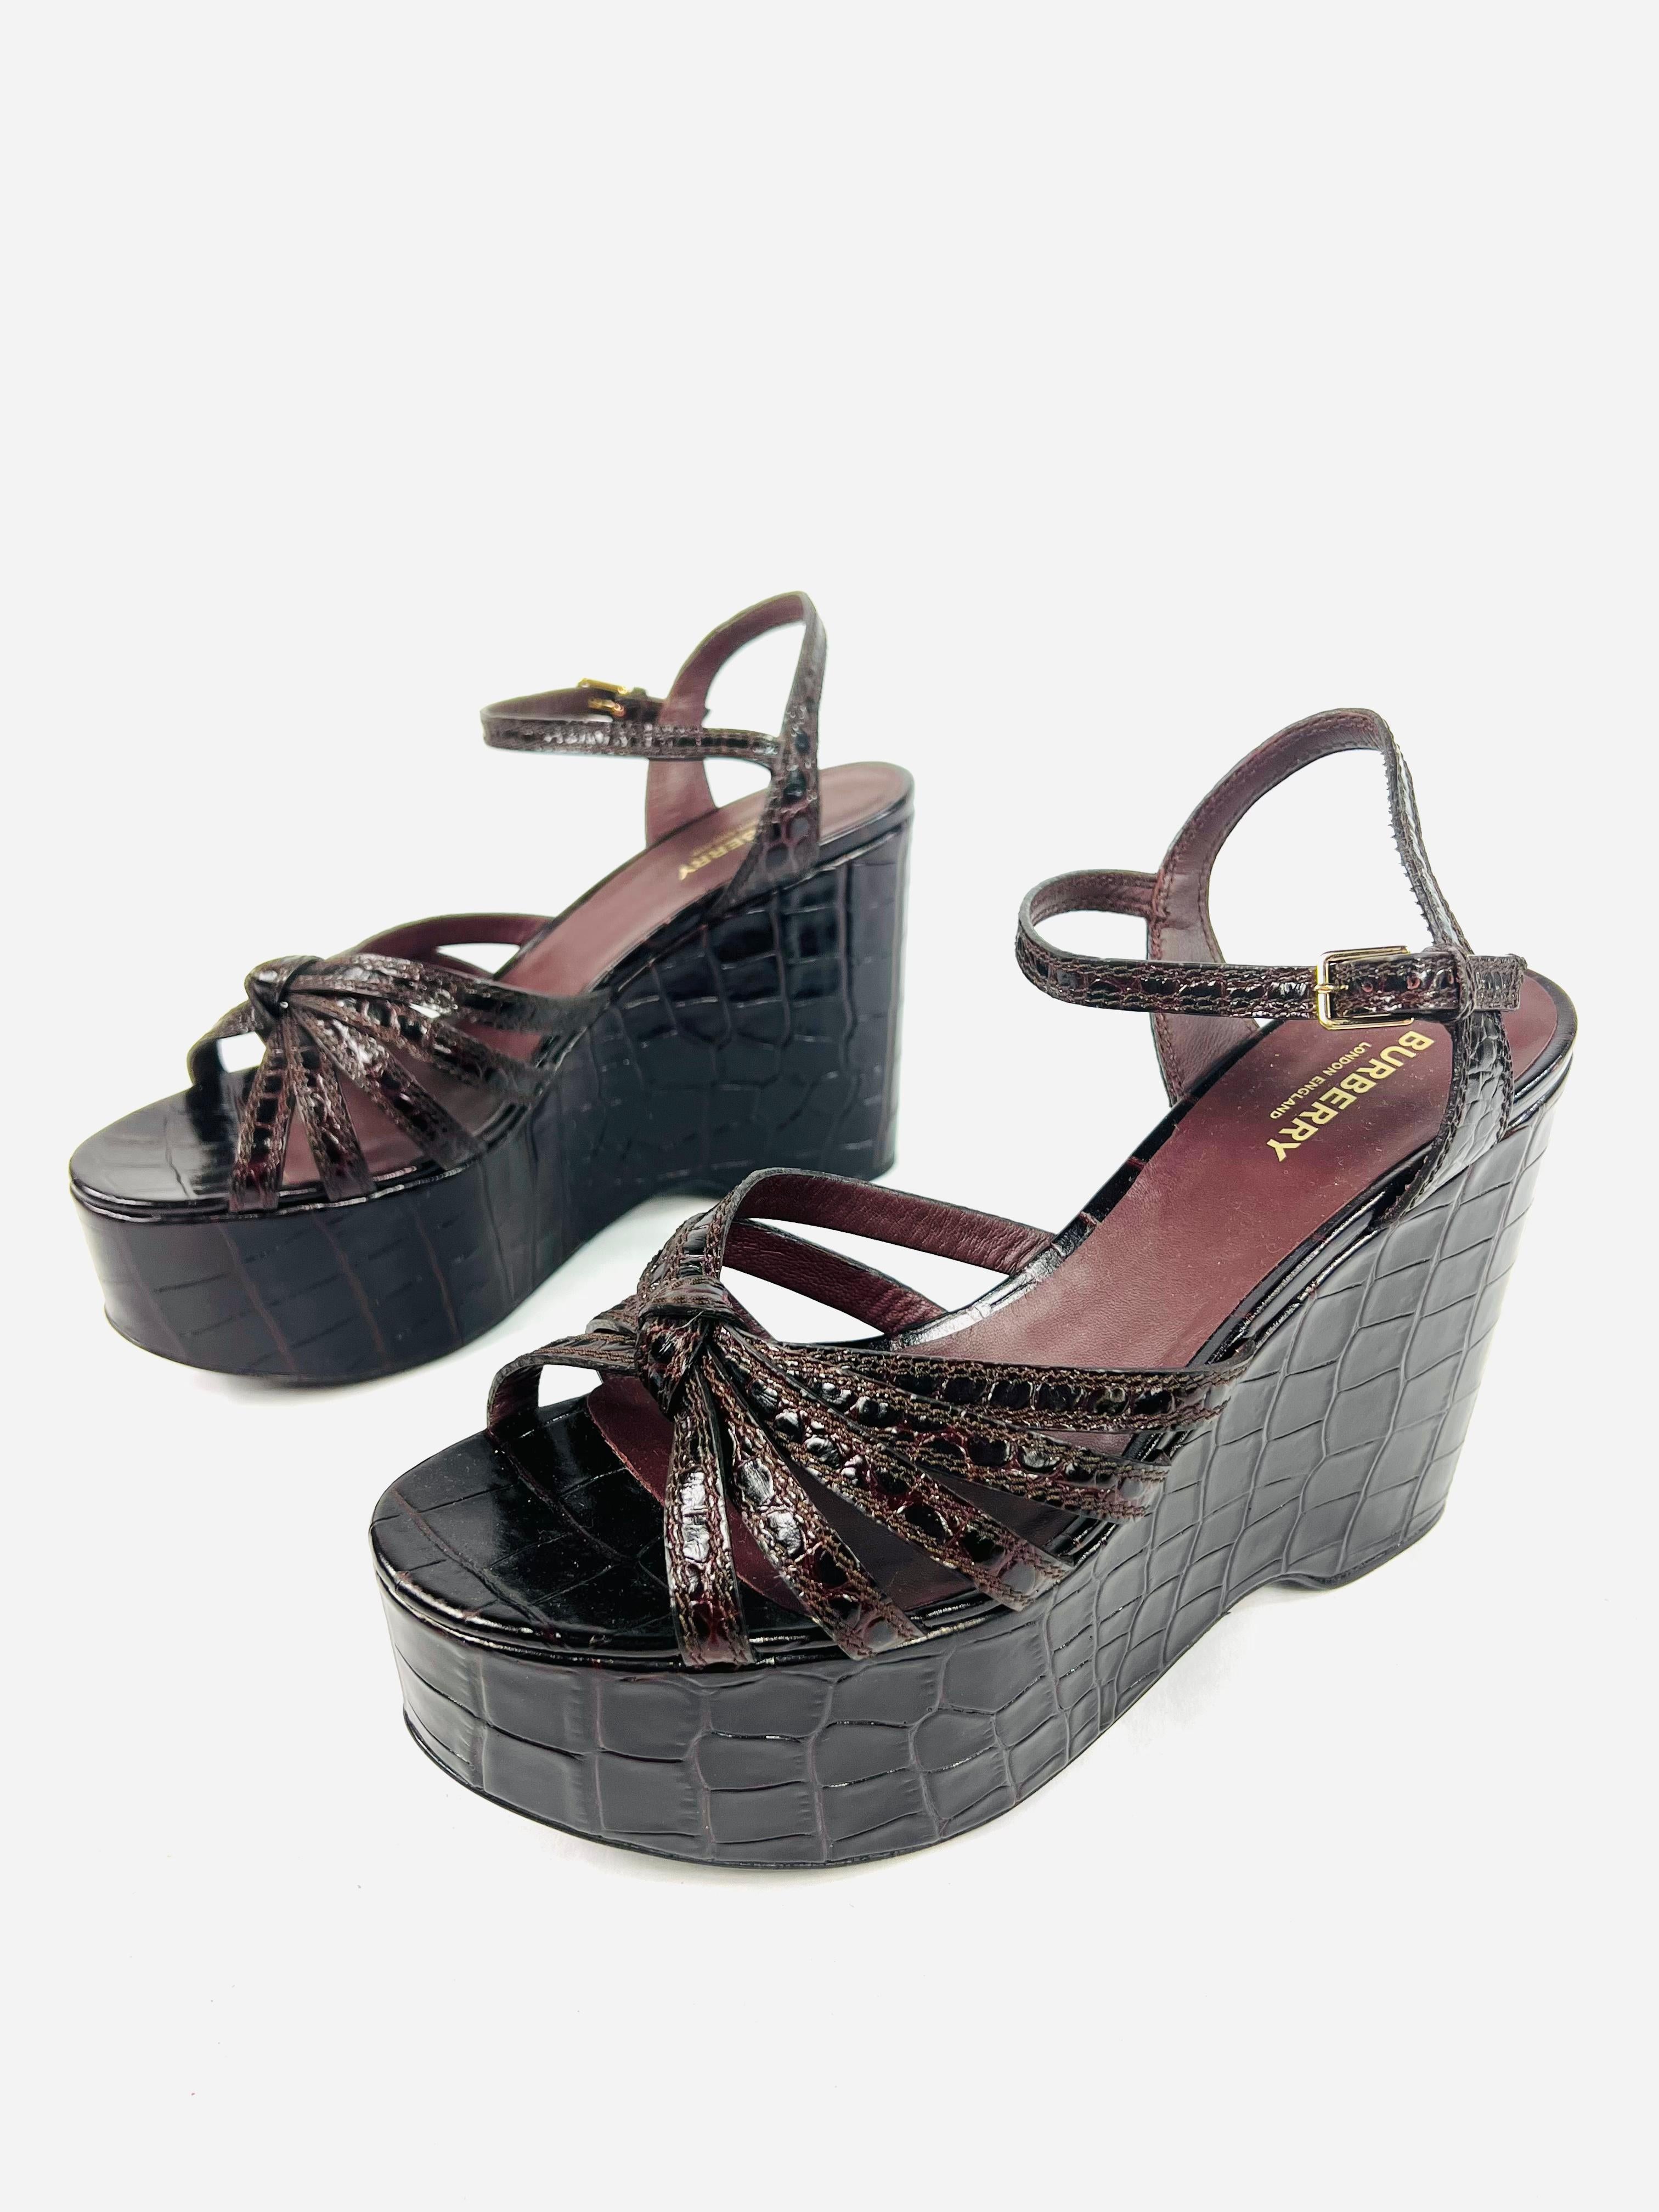 Burberry Burgunderfarbene Ledersandalen aus Tierleder Schuhe, Größe 41 (Grau) im Angebot